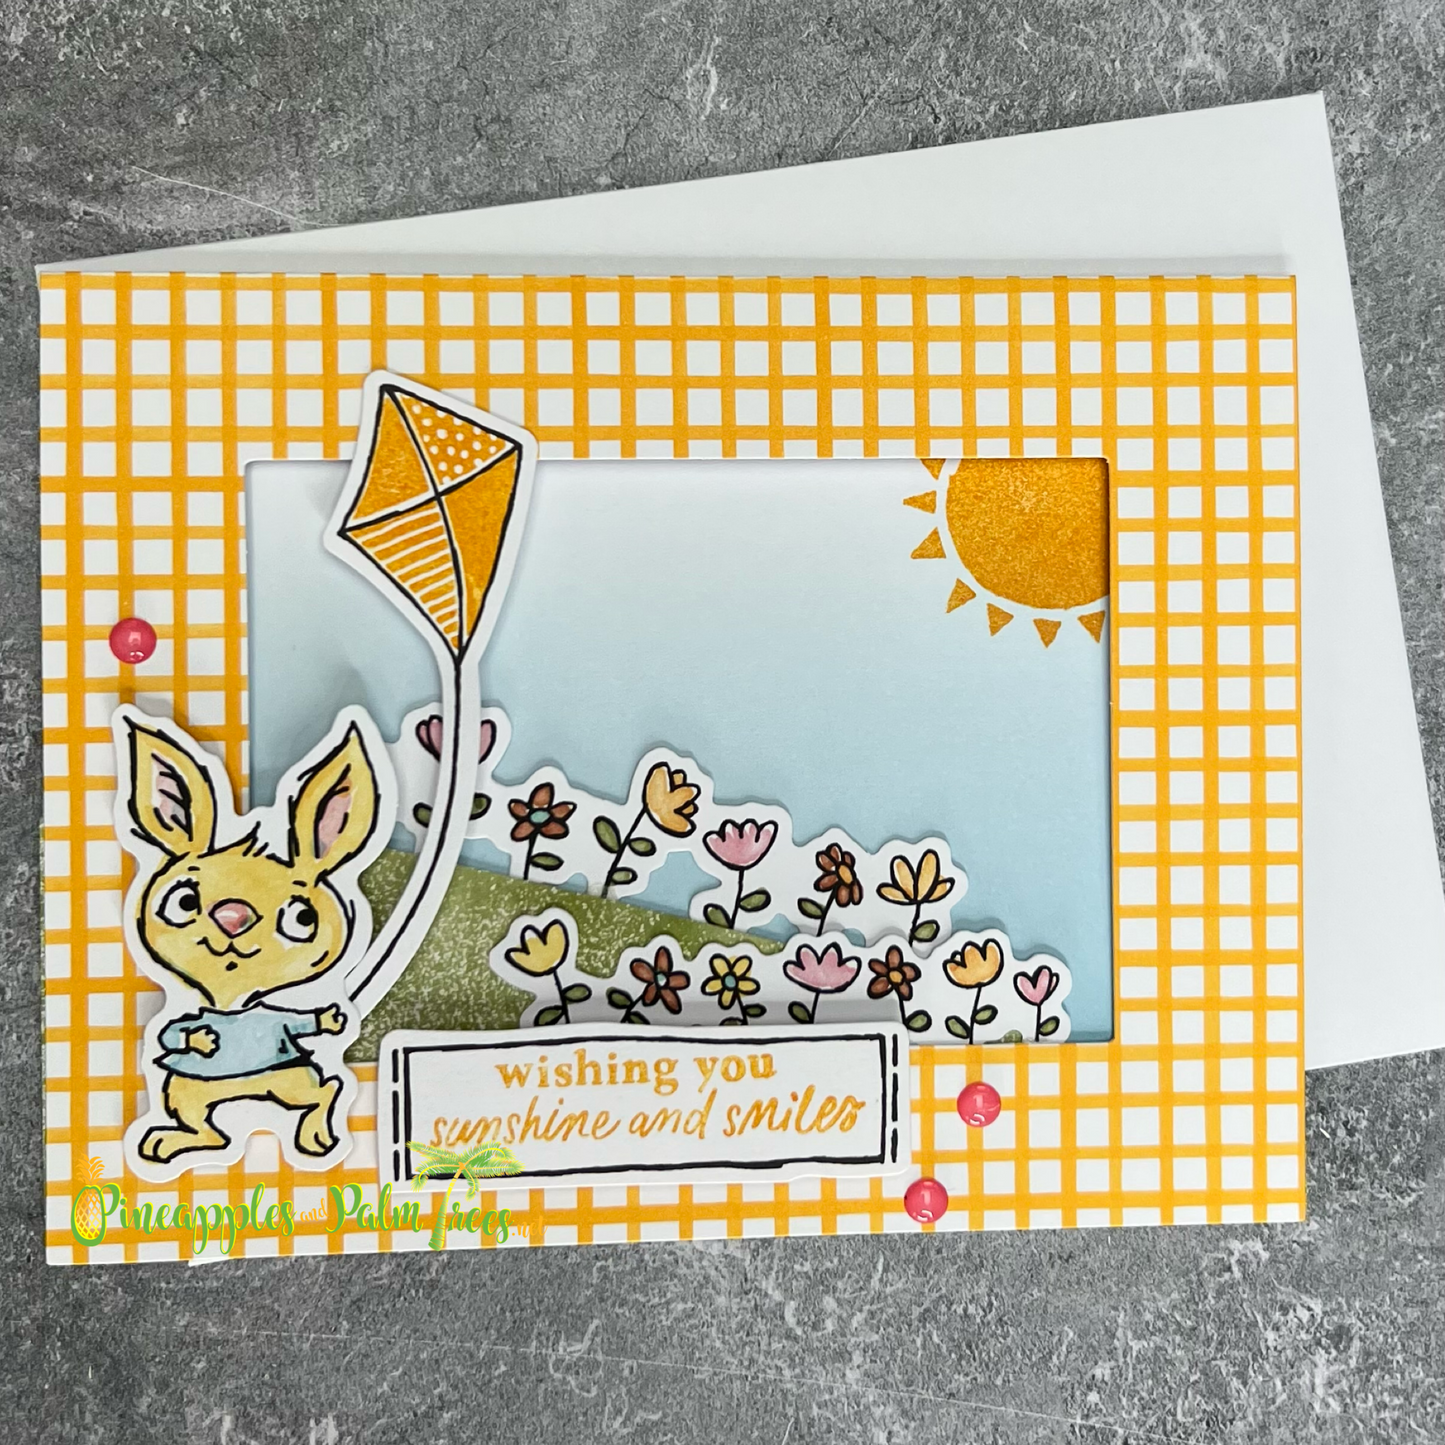 Greeting Card: Wishing You Sunshine and Smiles - bunny & kite